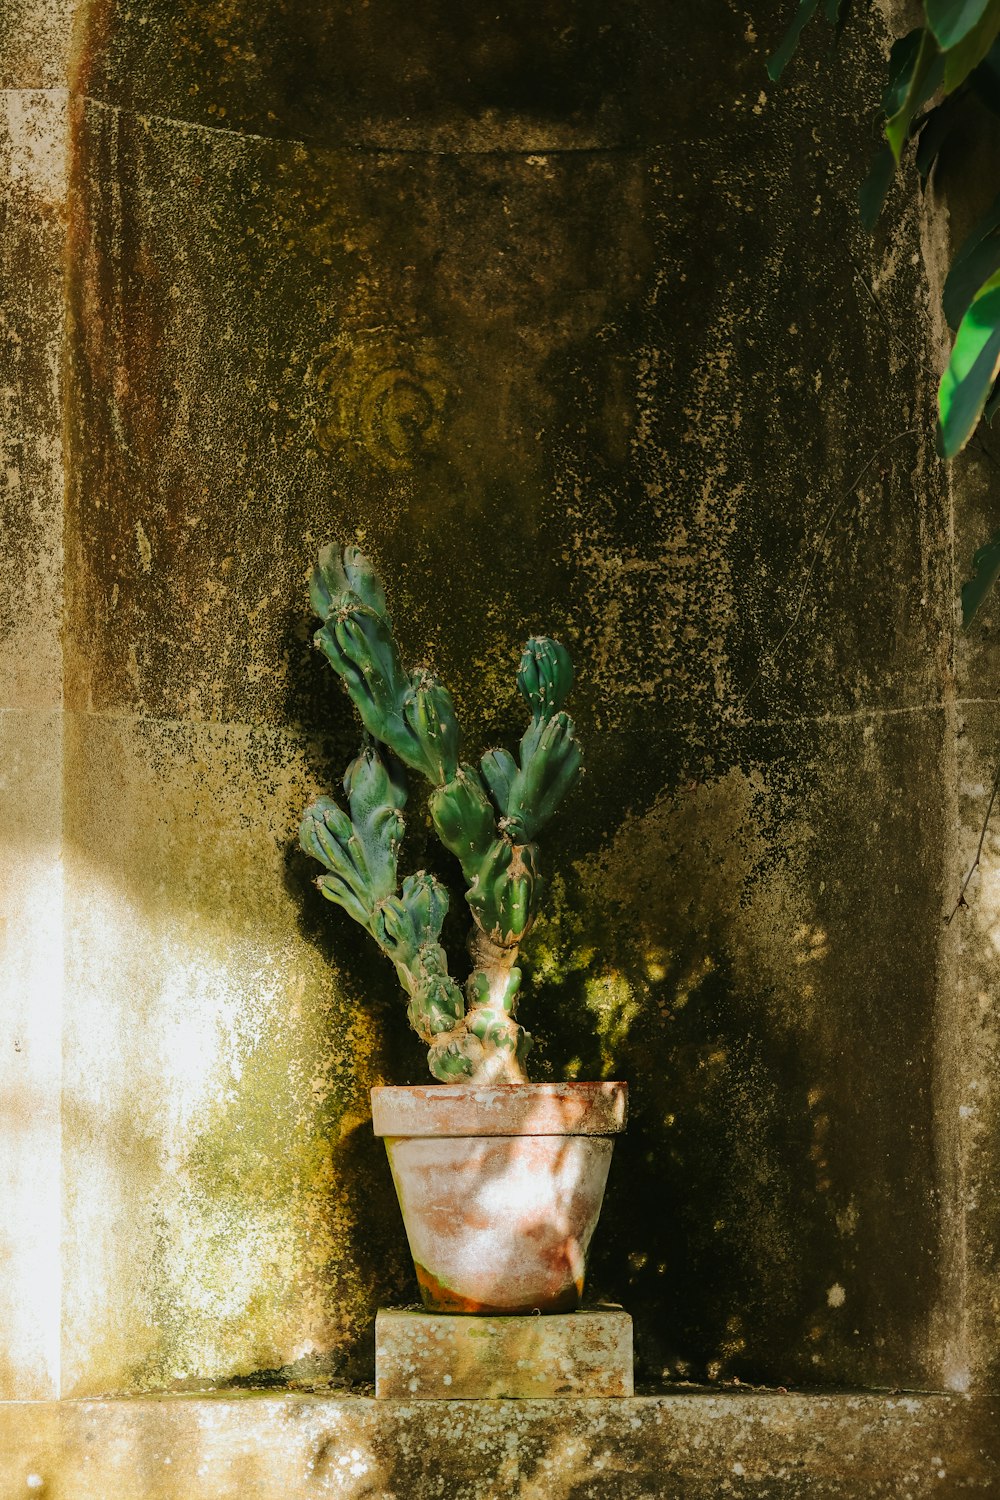 a cactus in a pot on a ledge